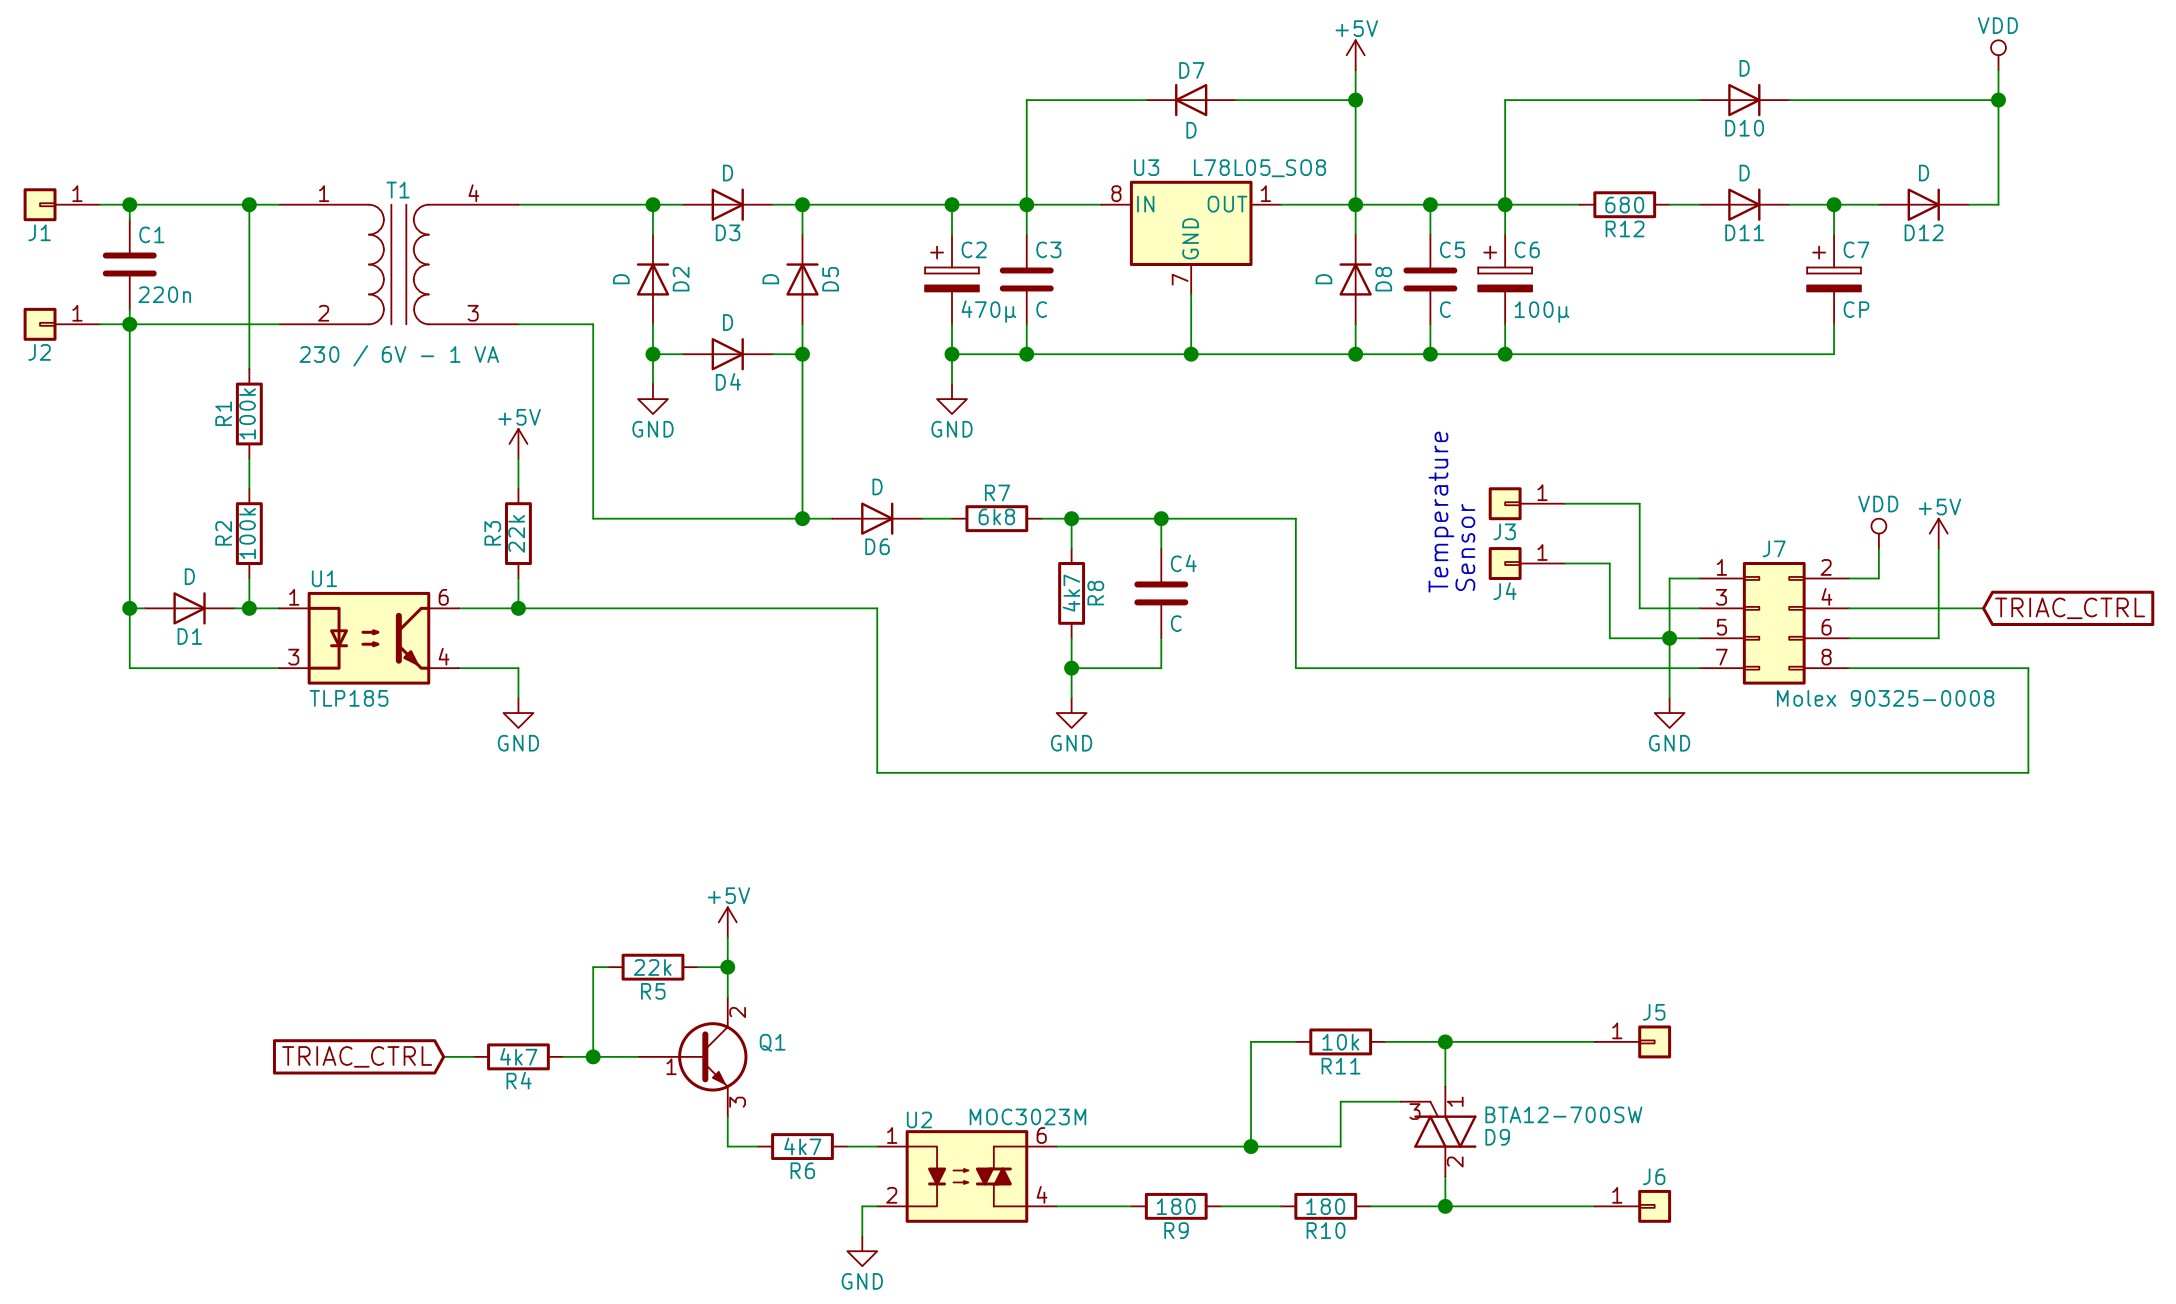 Schematic of heater power board